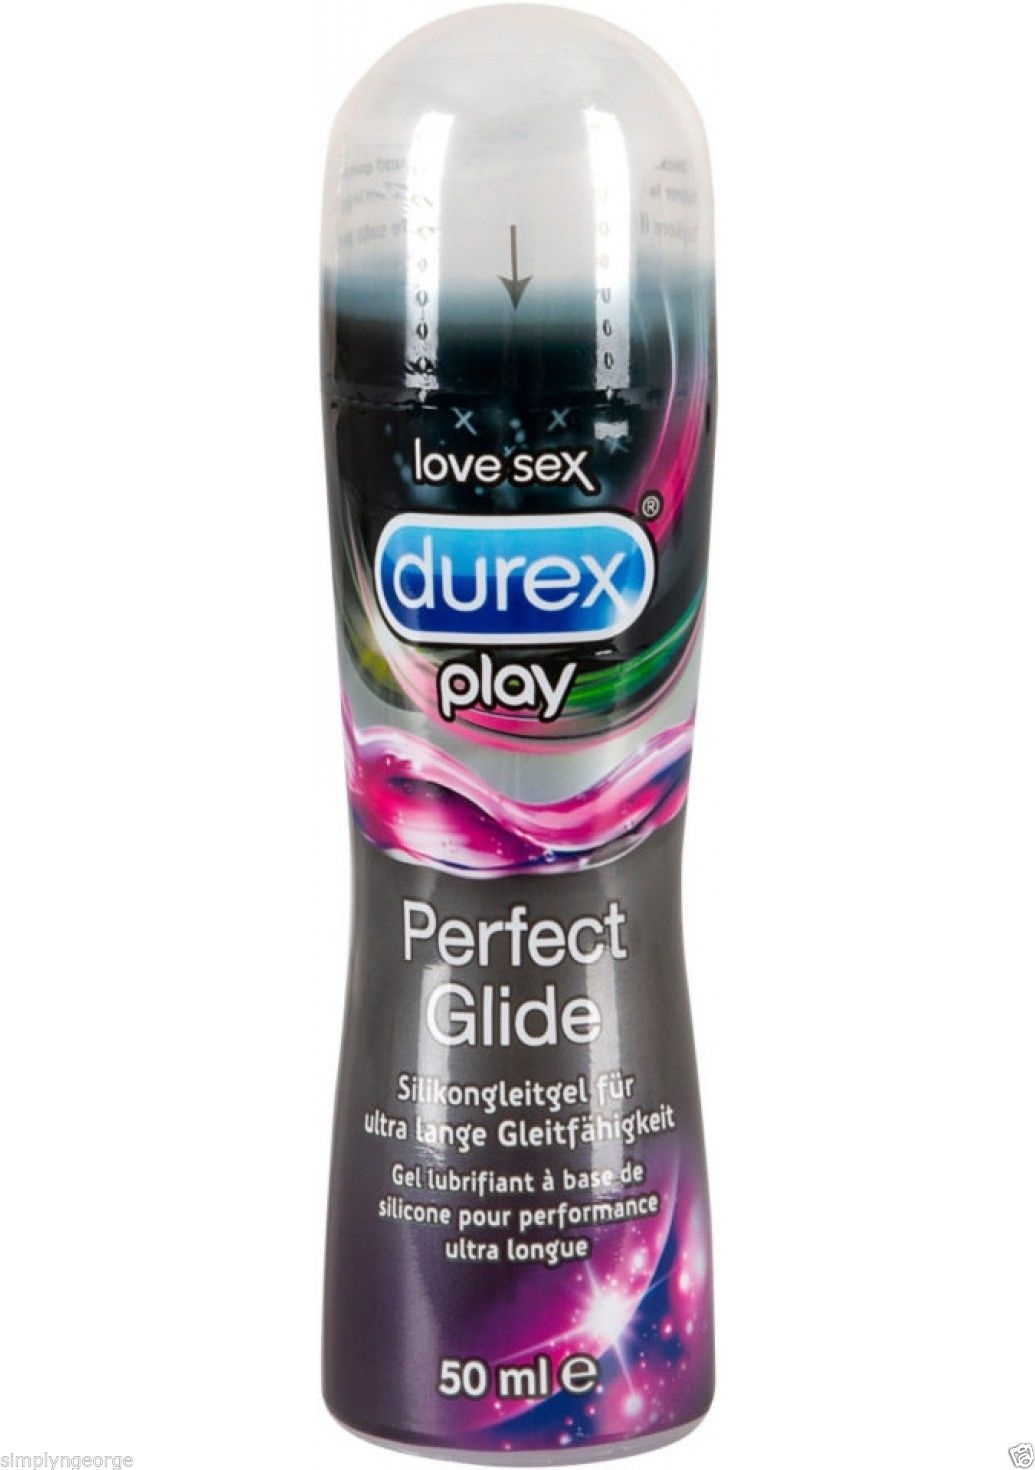 Durex Play Perfect Glide lubrifiant 50 ml